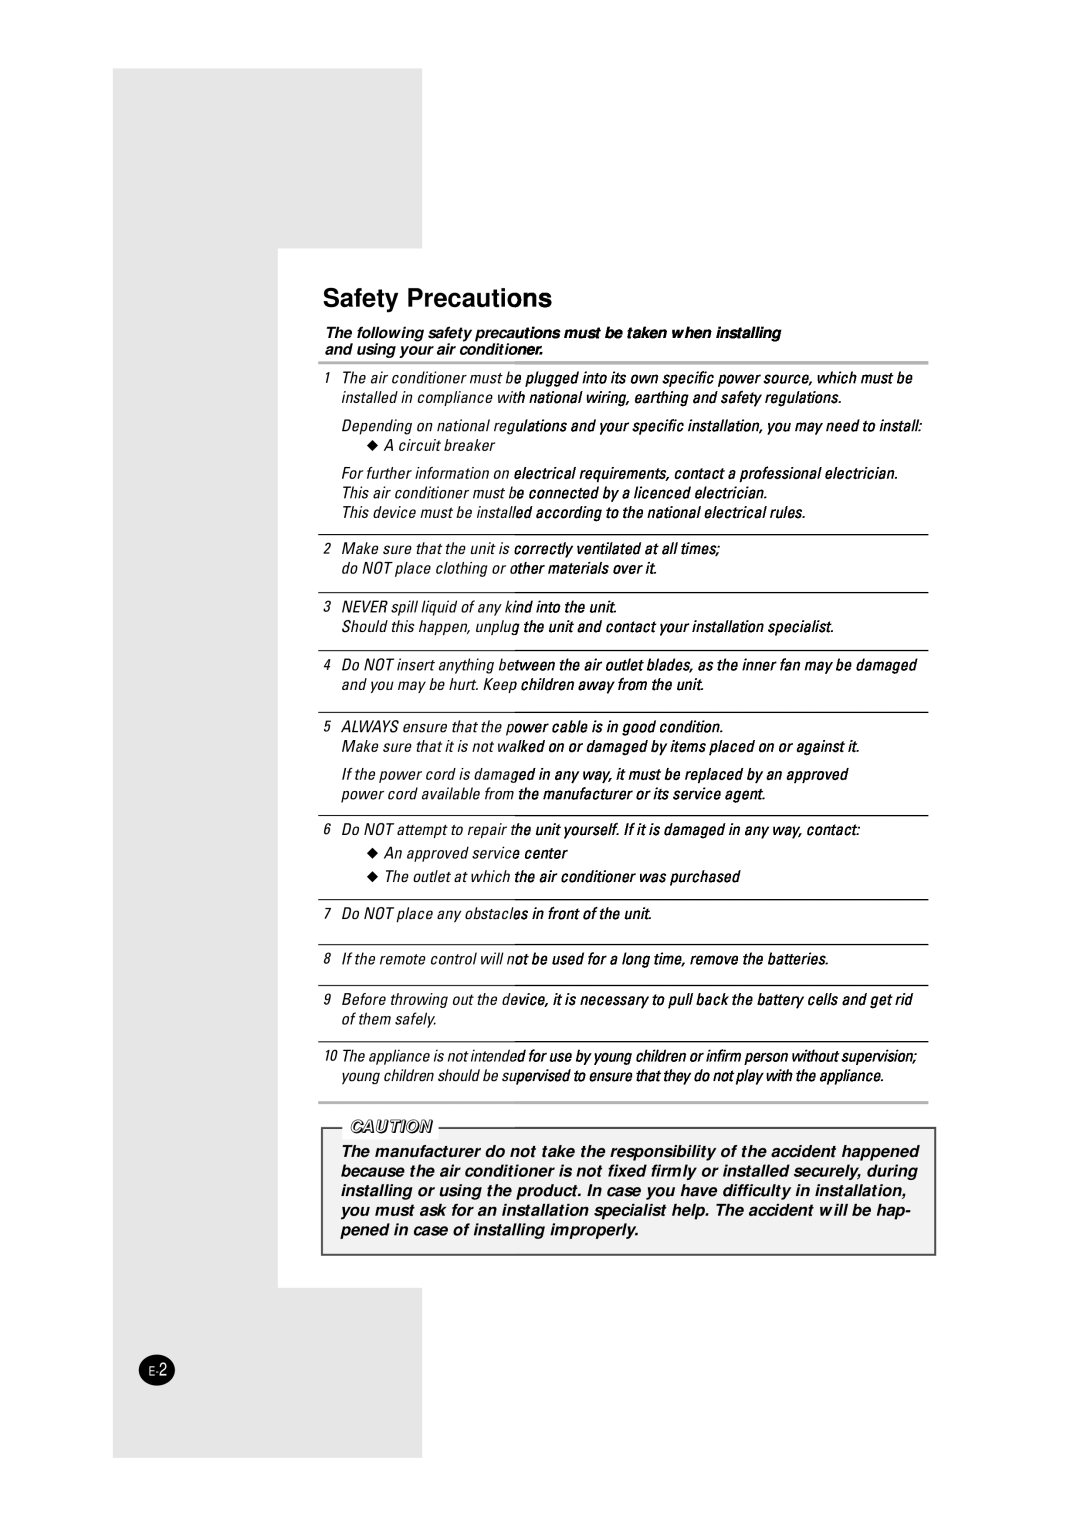 Samsung AW147JB, WC12ZR, AW12A6(A7)JA, AW12A6(A7)JD, AW146JB, AW127JE/B, AW126JE/B manuel dutilisation Safety Precautions 